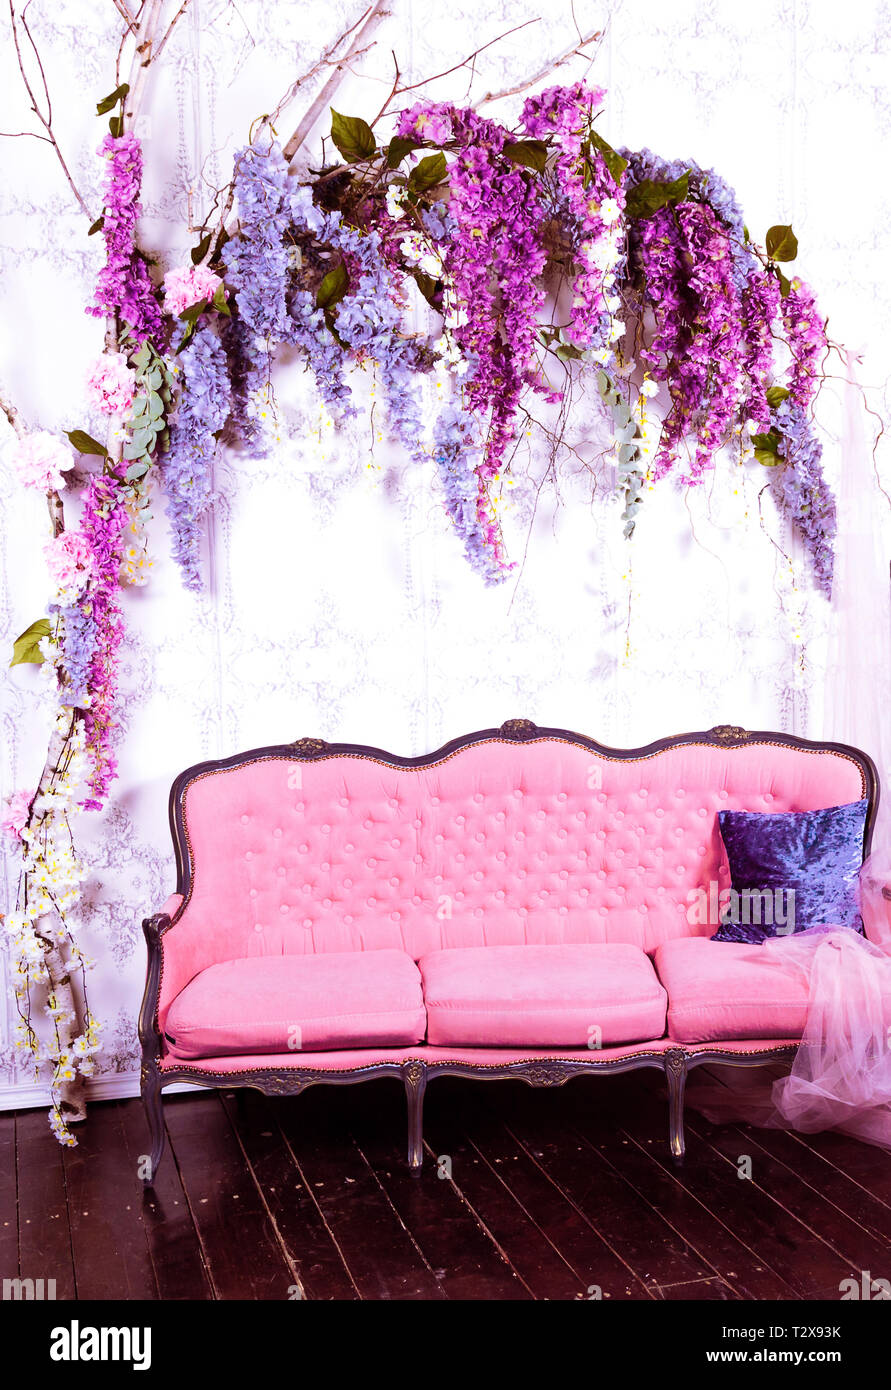 Sofa, pattern, wood, purple, Couch, Kissen Muster Sessel lila kolonial Holz  pillow colorful beautiful window Stock Photo - Alamy